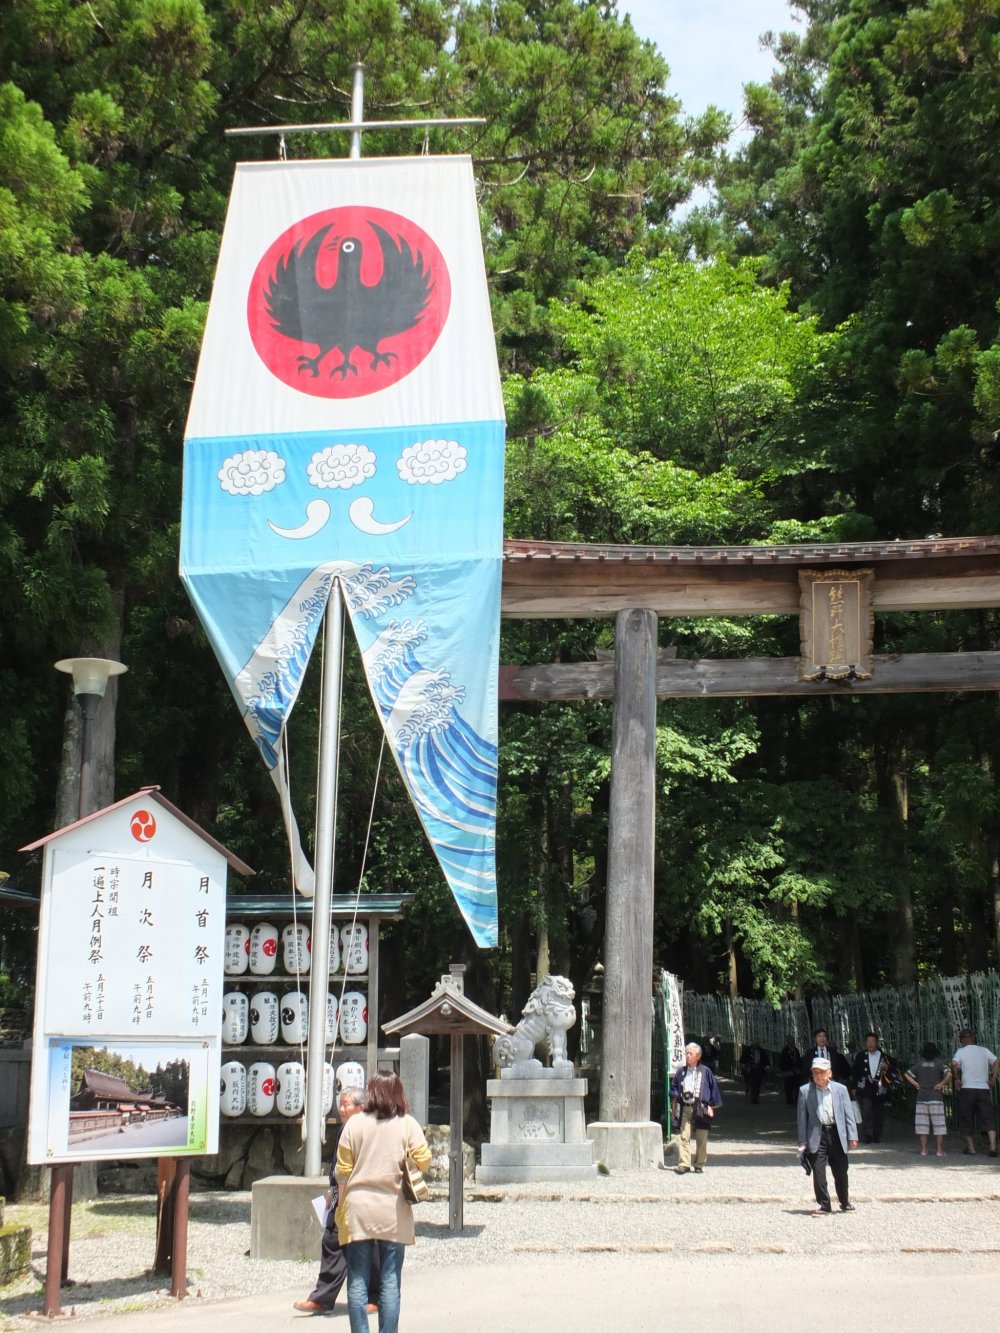 Grand entrance to the shrine